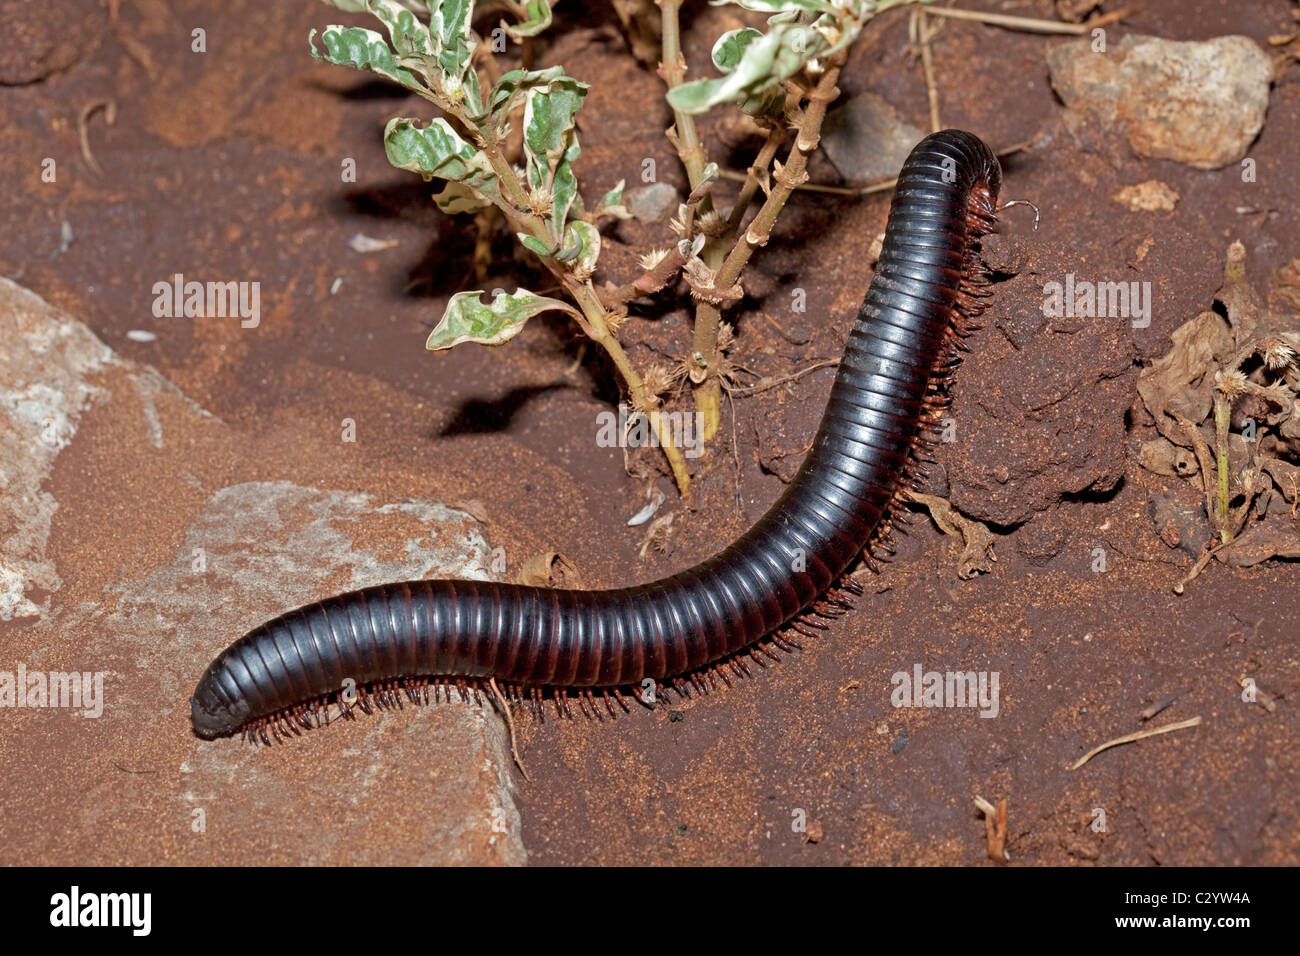 Giant millipede locally called chongololo Mombasa Kenya Stock Photo